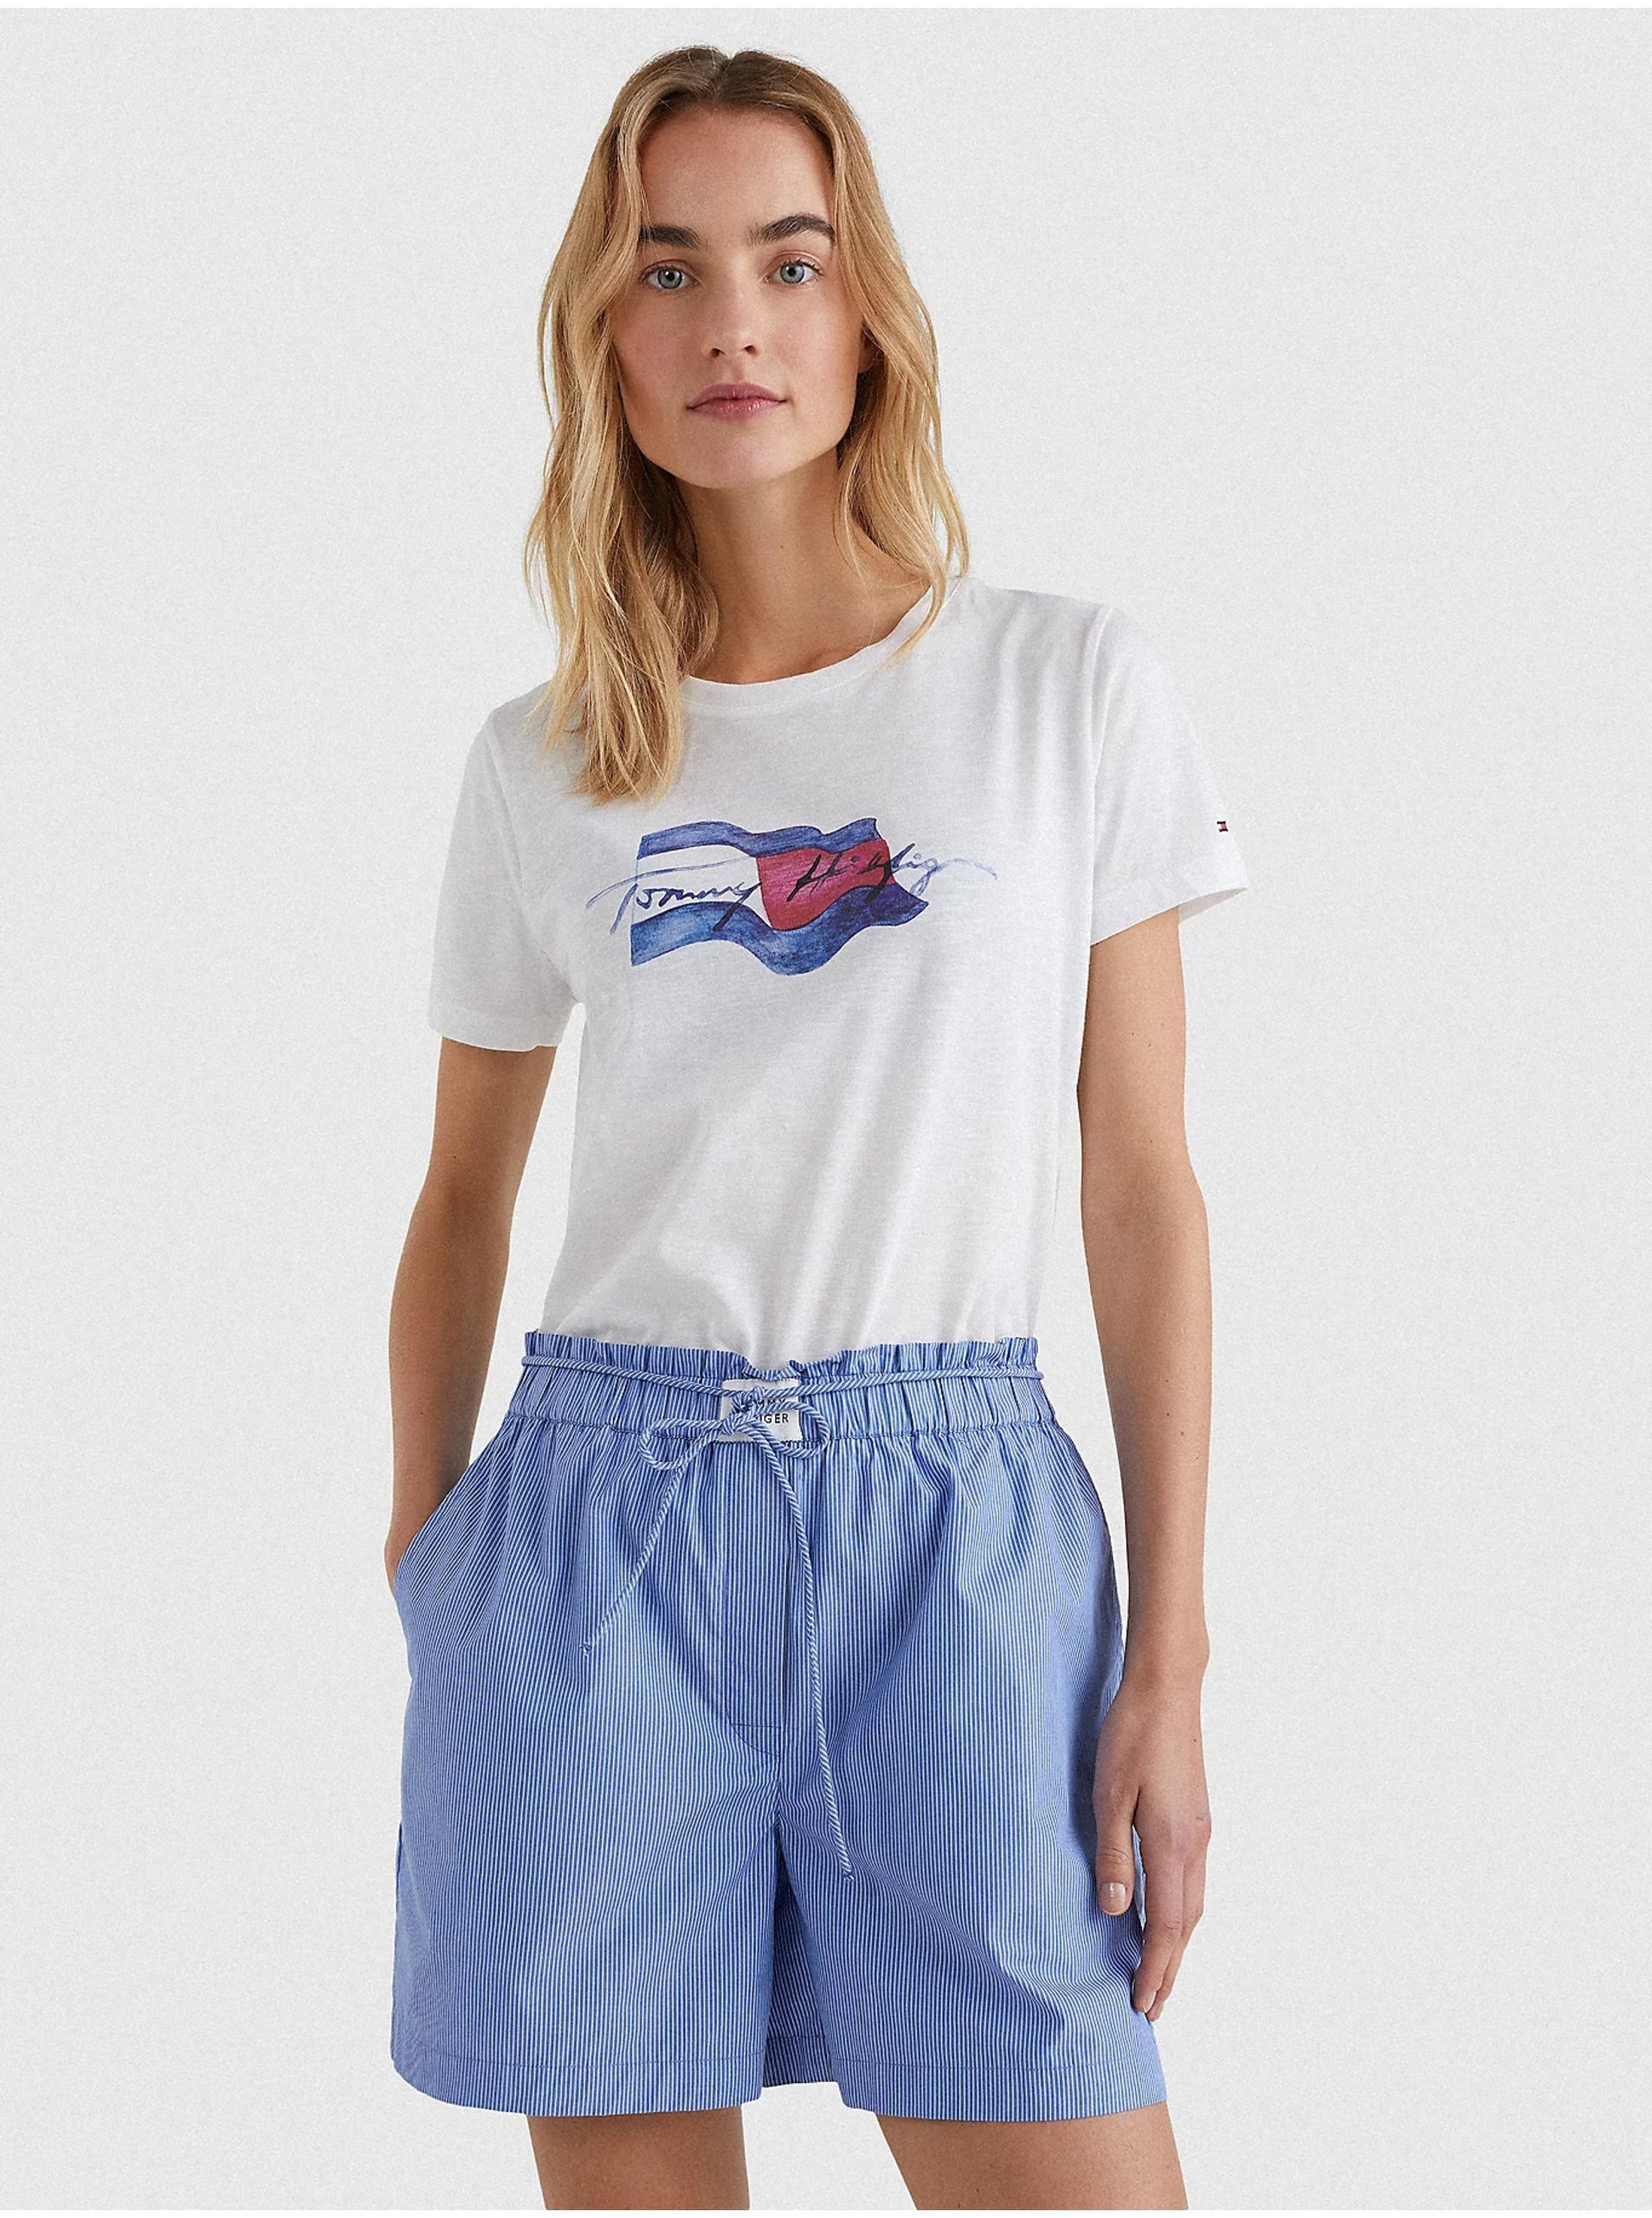 White women's T-shirt Tommy Hilfiger - Women